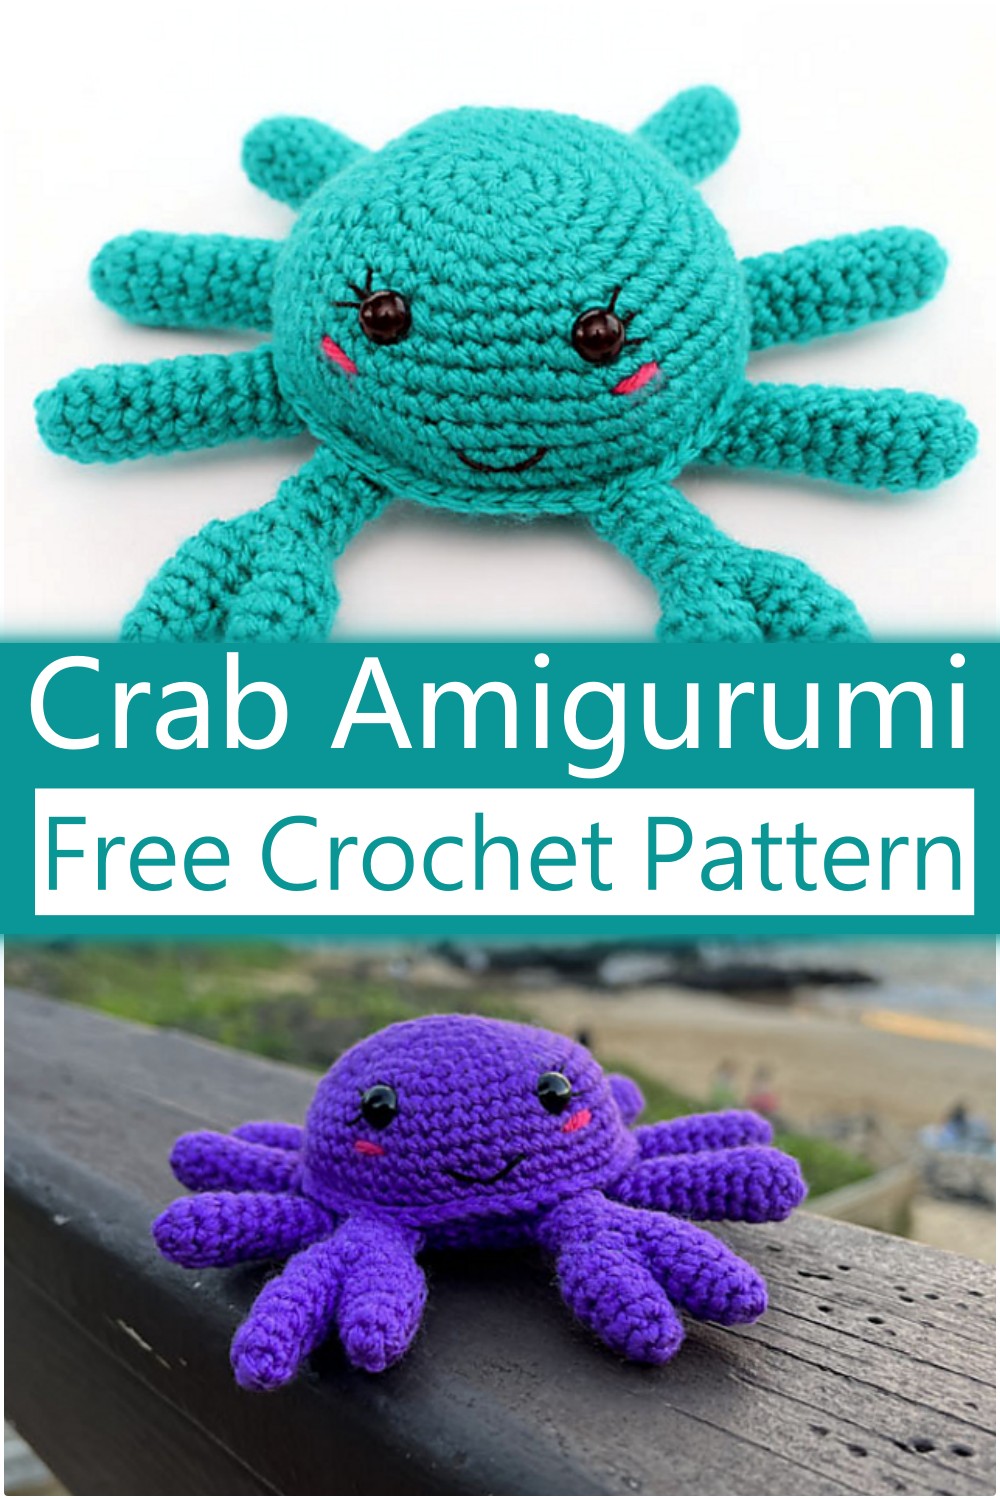 Crochet Amigurumi Crab Pattern